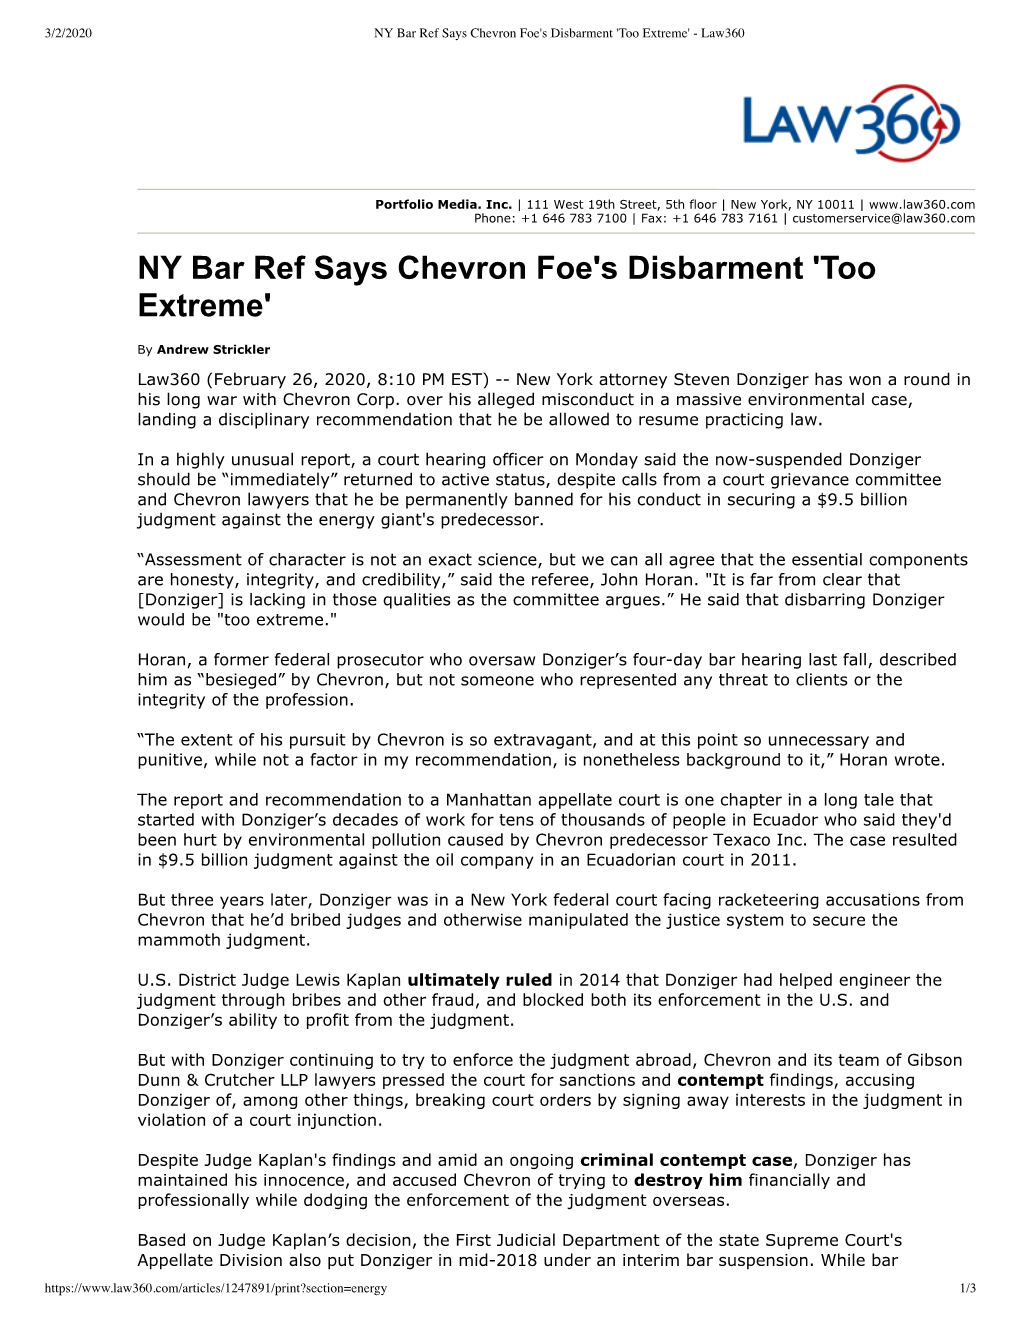 NY Bar Ref Says Chevron Foe's Disbarment 'Too Extreme' - Law360